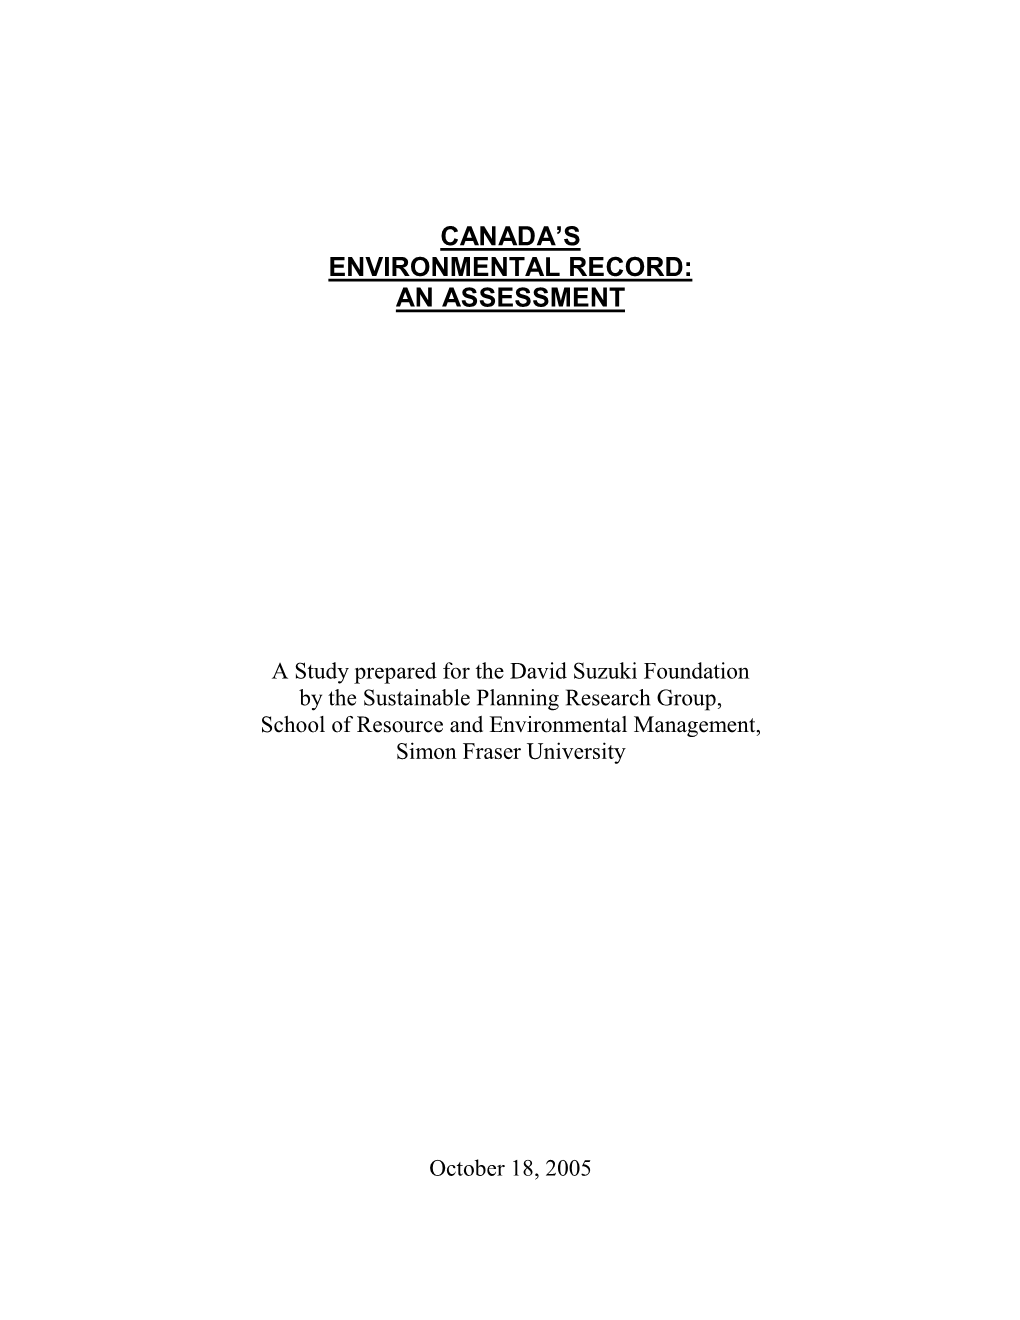 Canada's Environmental Record